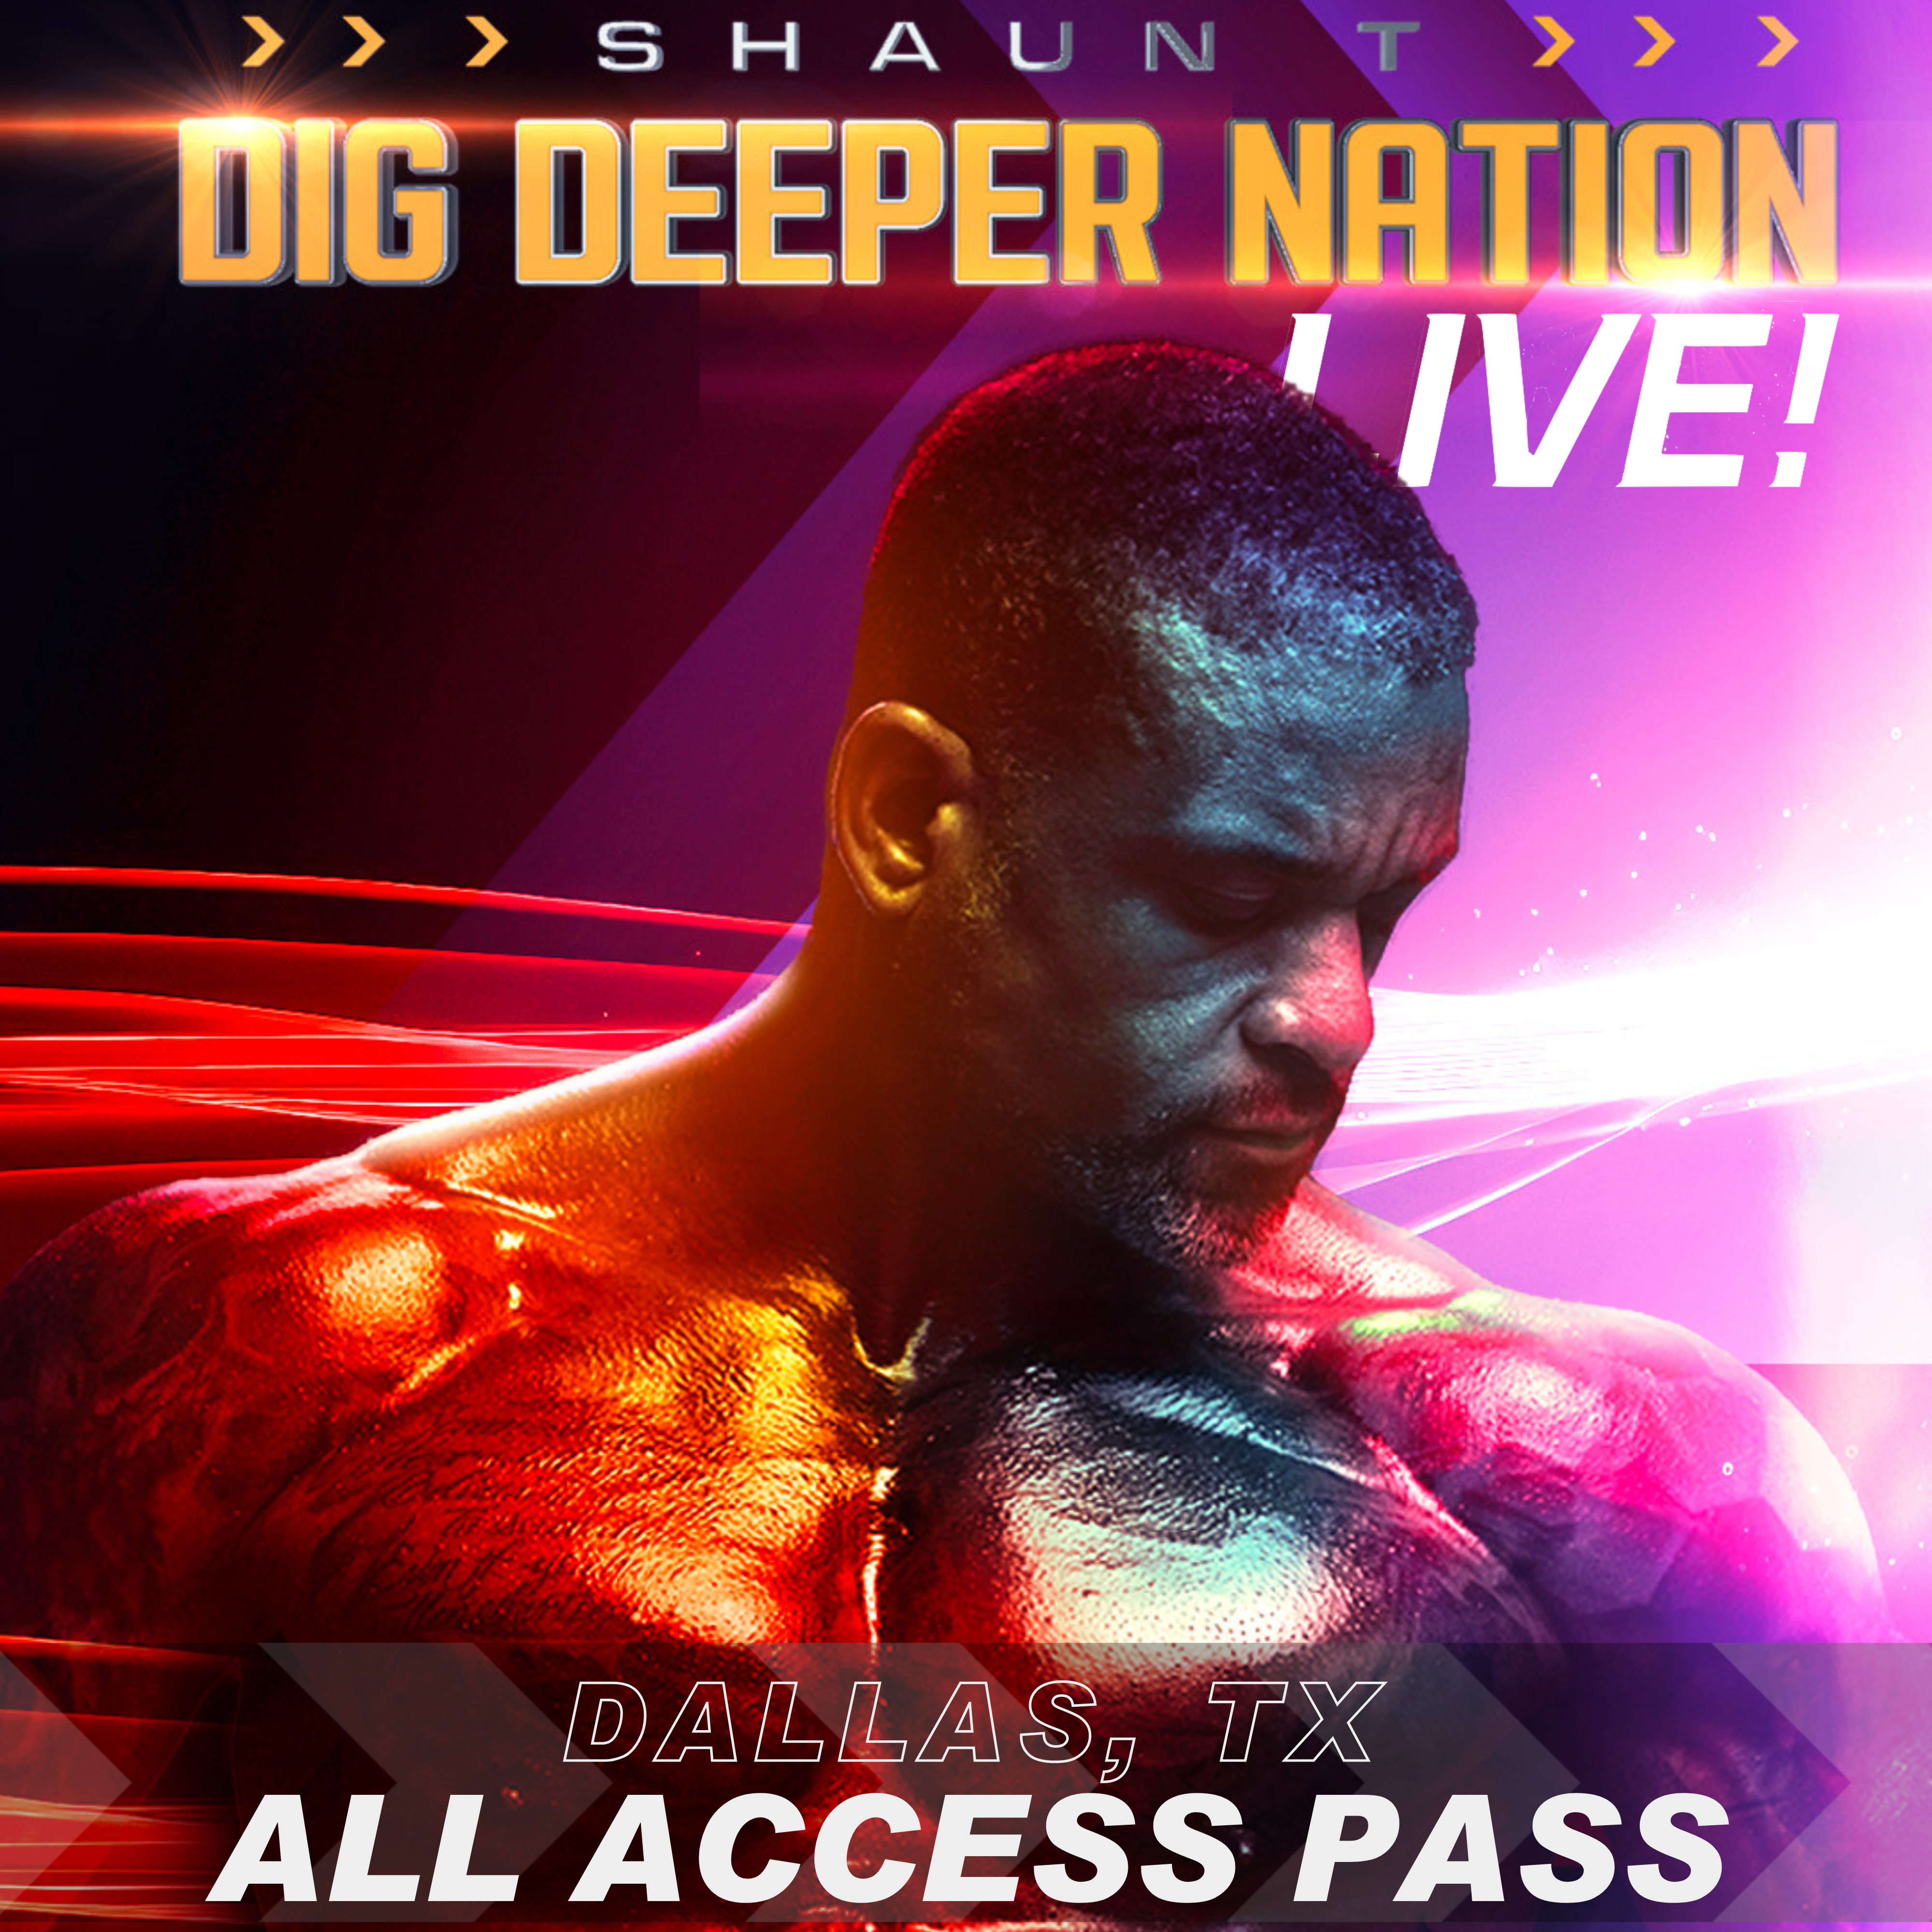 Dig Deeper Nation Live Dallas - All Access